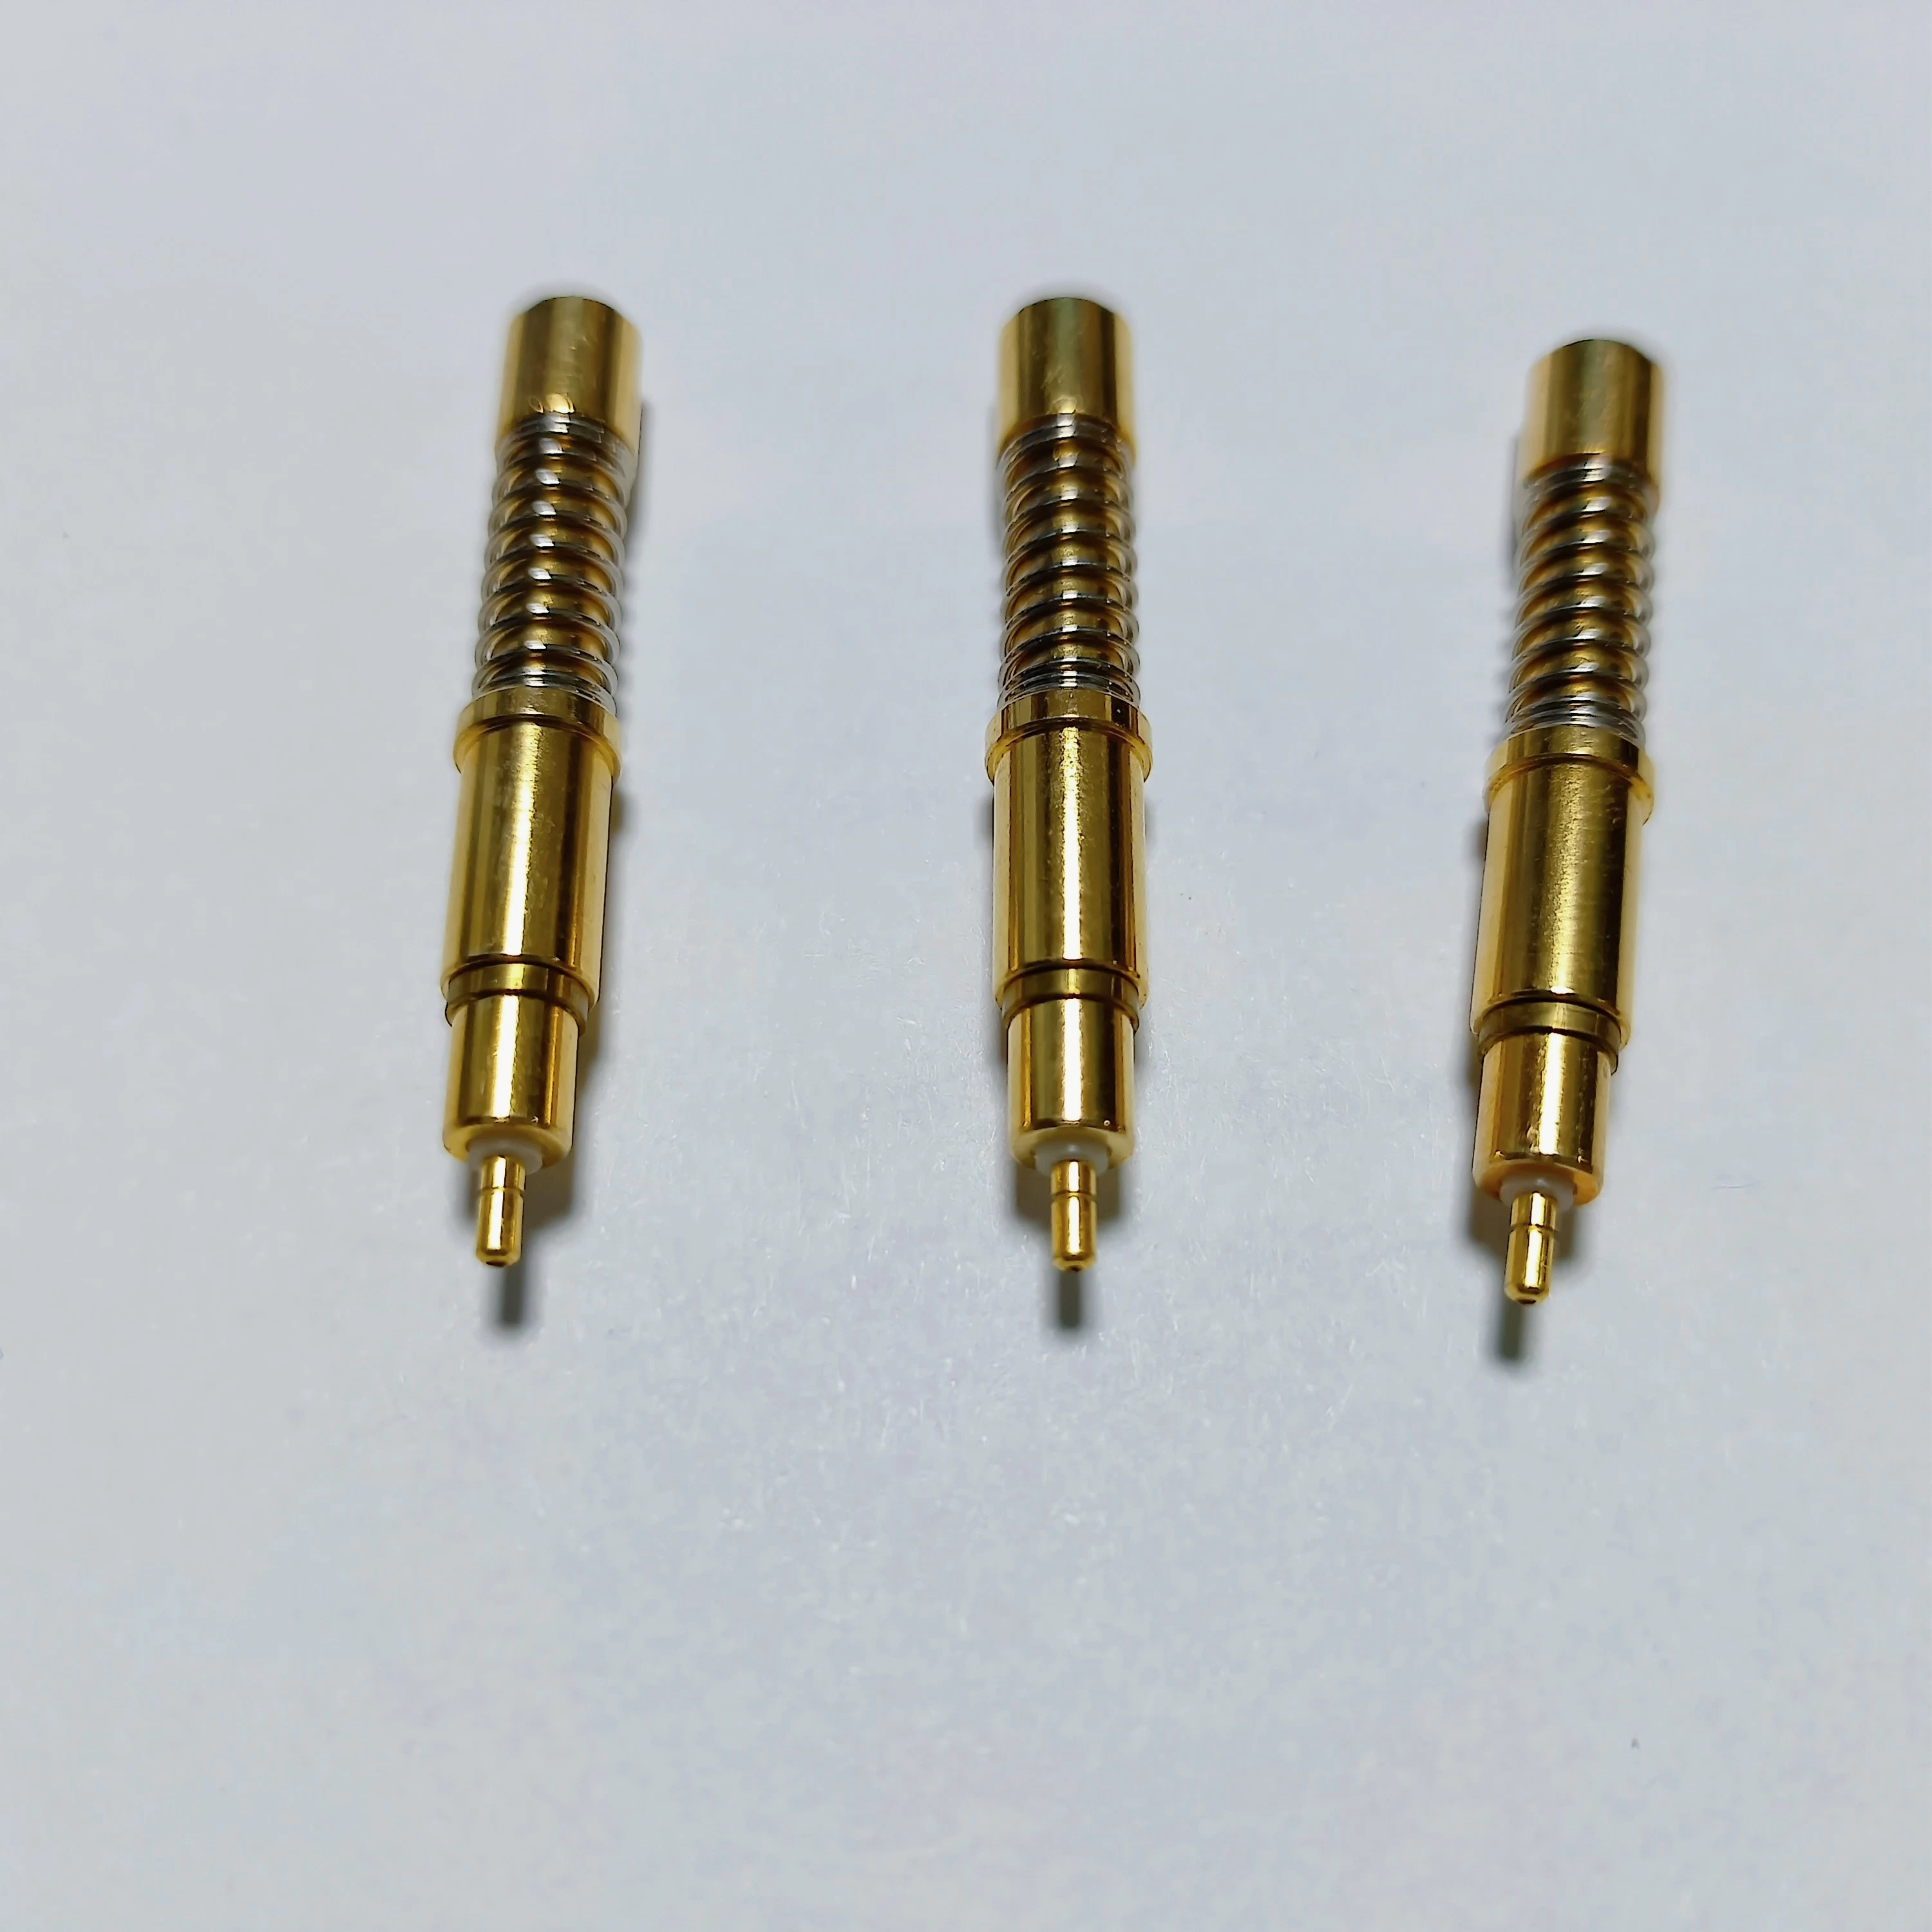 Hot Export Brass Test High Current Probe Pins